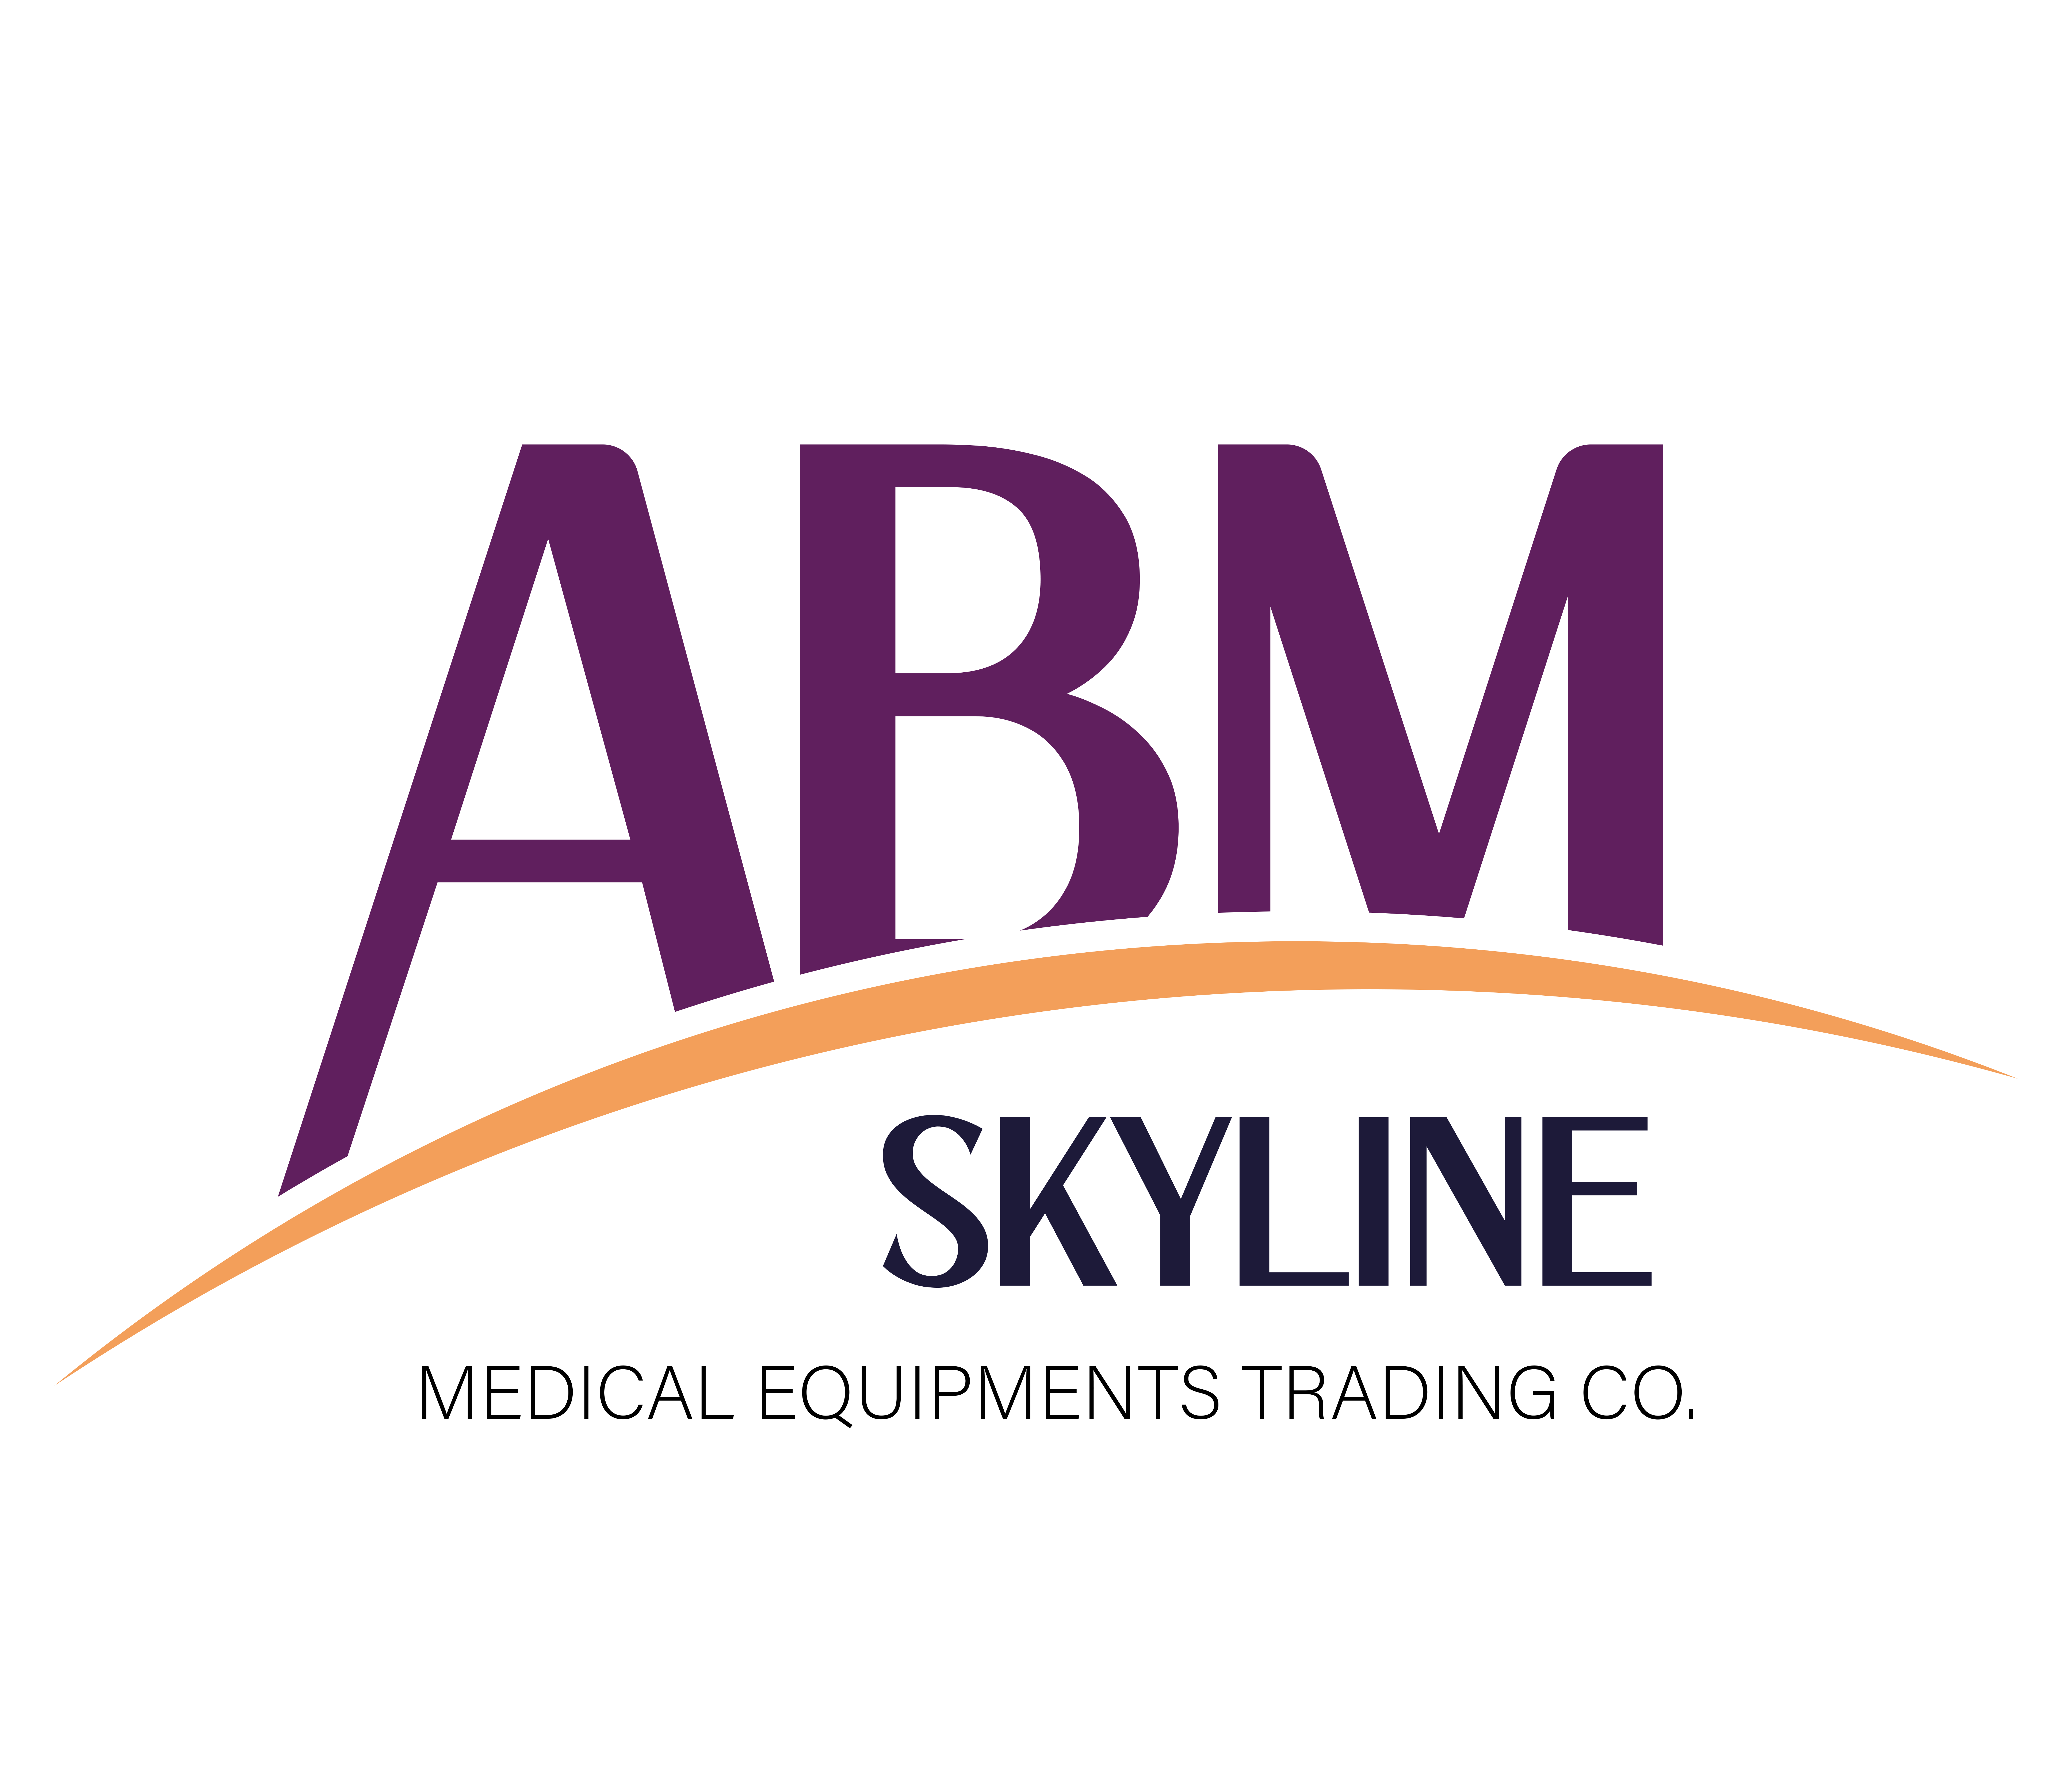 ABM Skyline logo copy